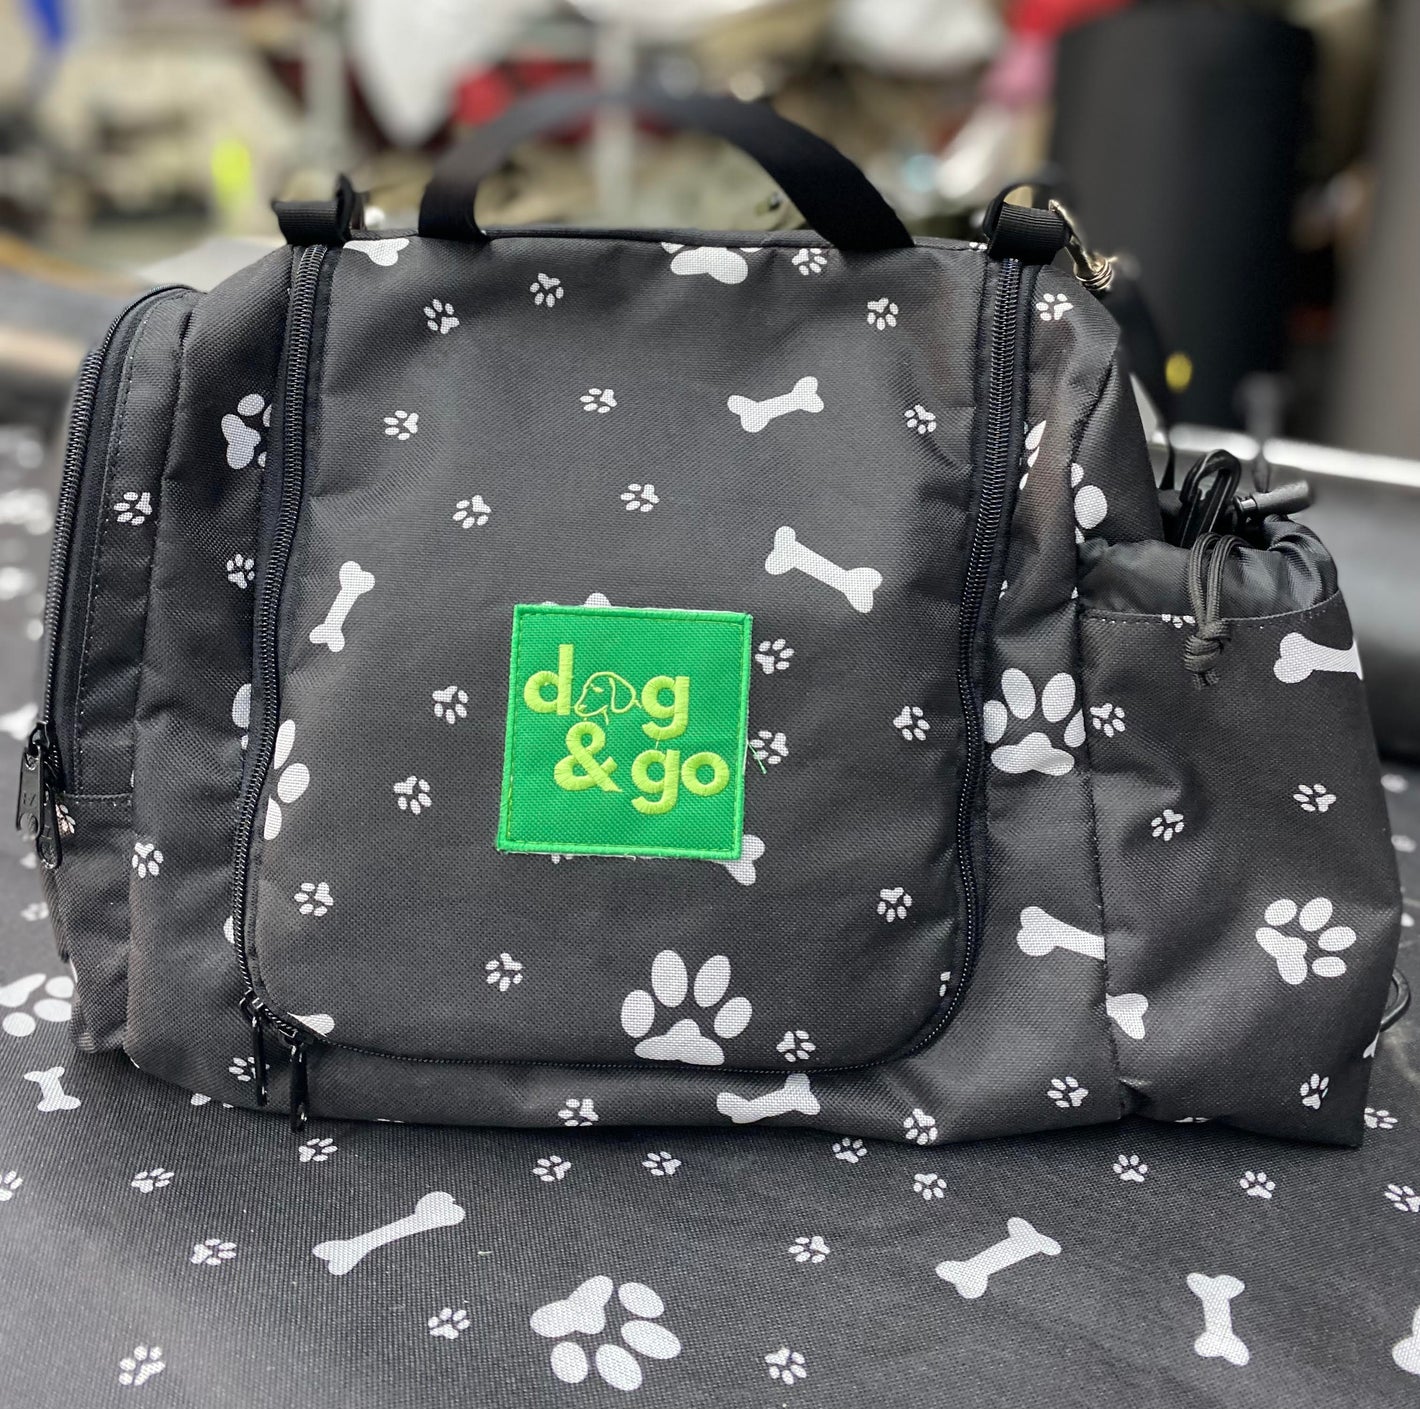 dog travel bag for supplies